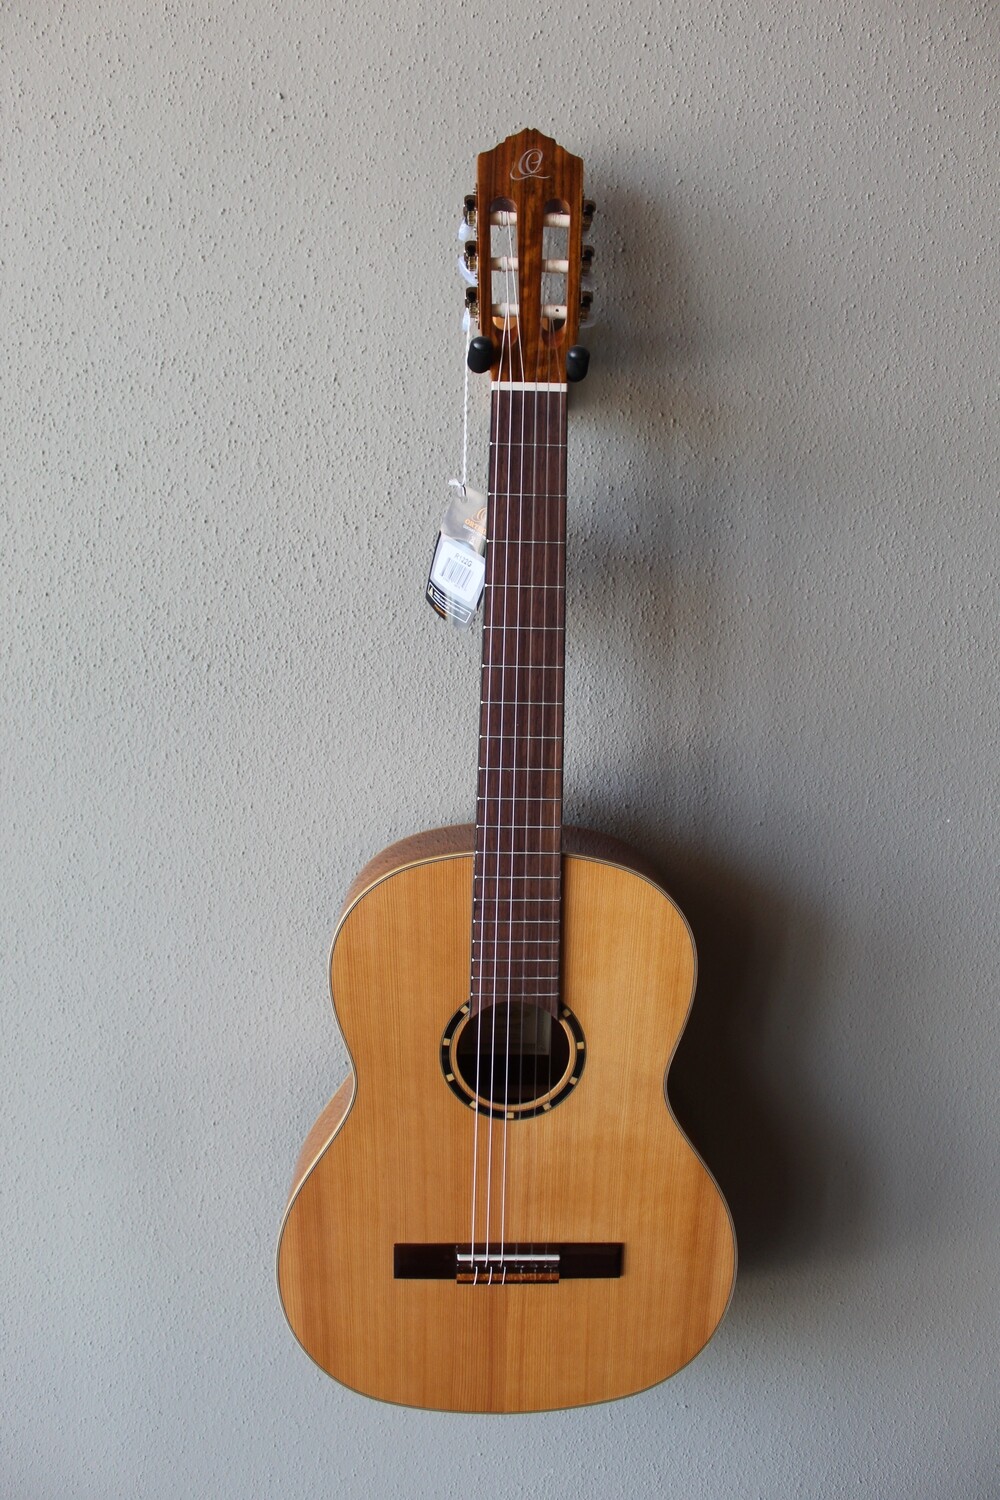 Ortega R122G Full Size Nylon String Classical Guitar with Deluxe Gig Bag